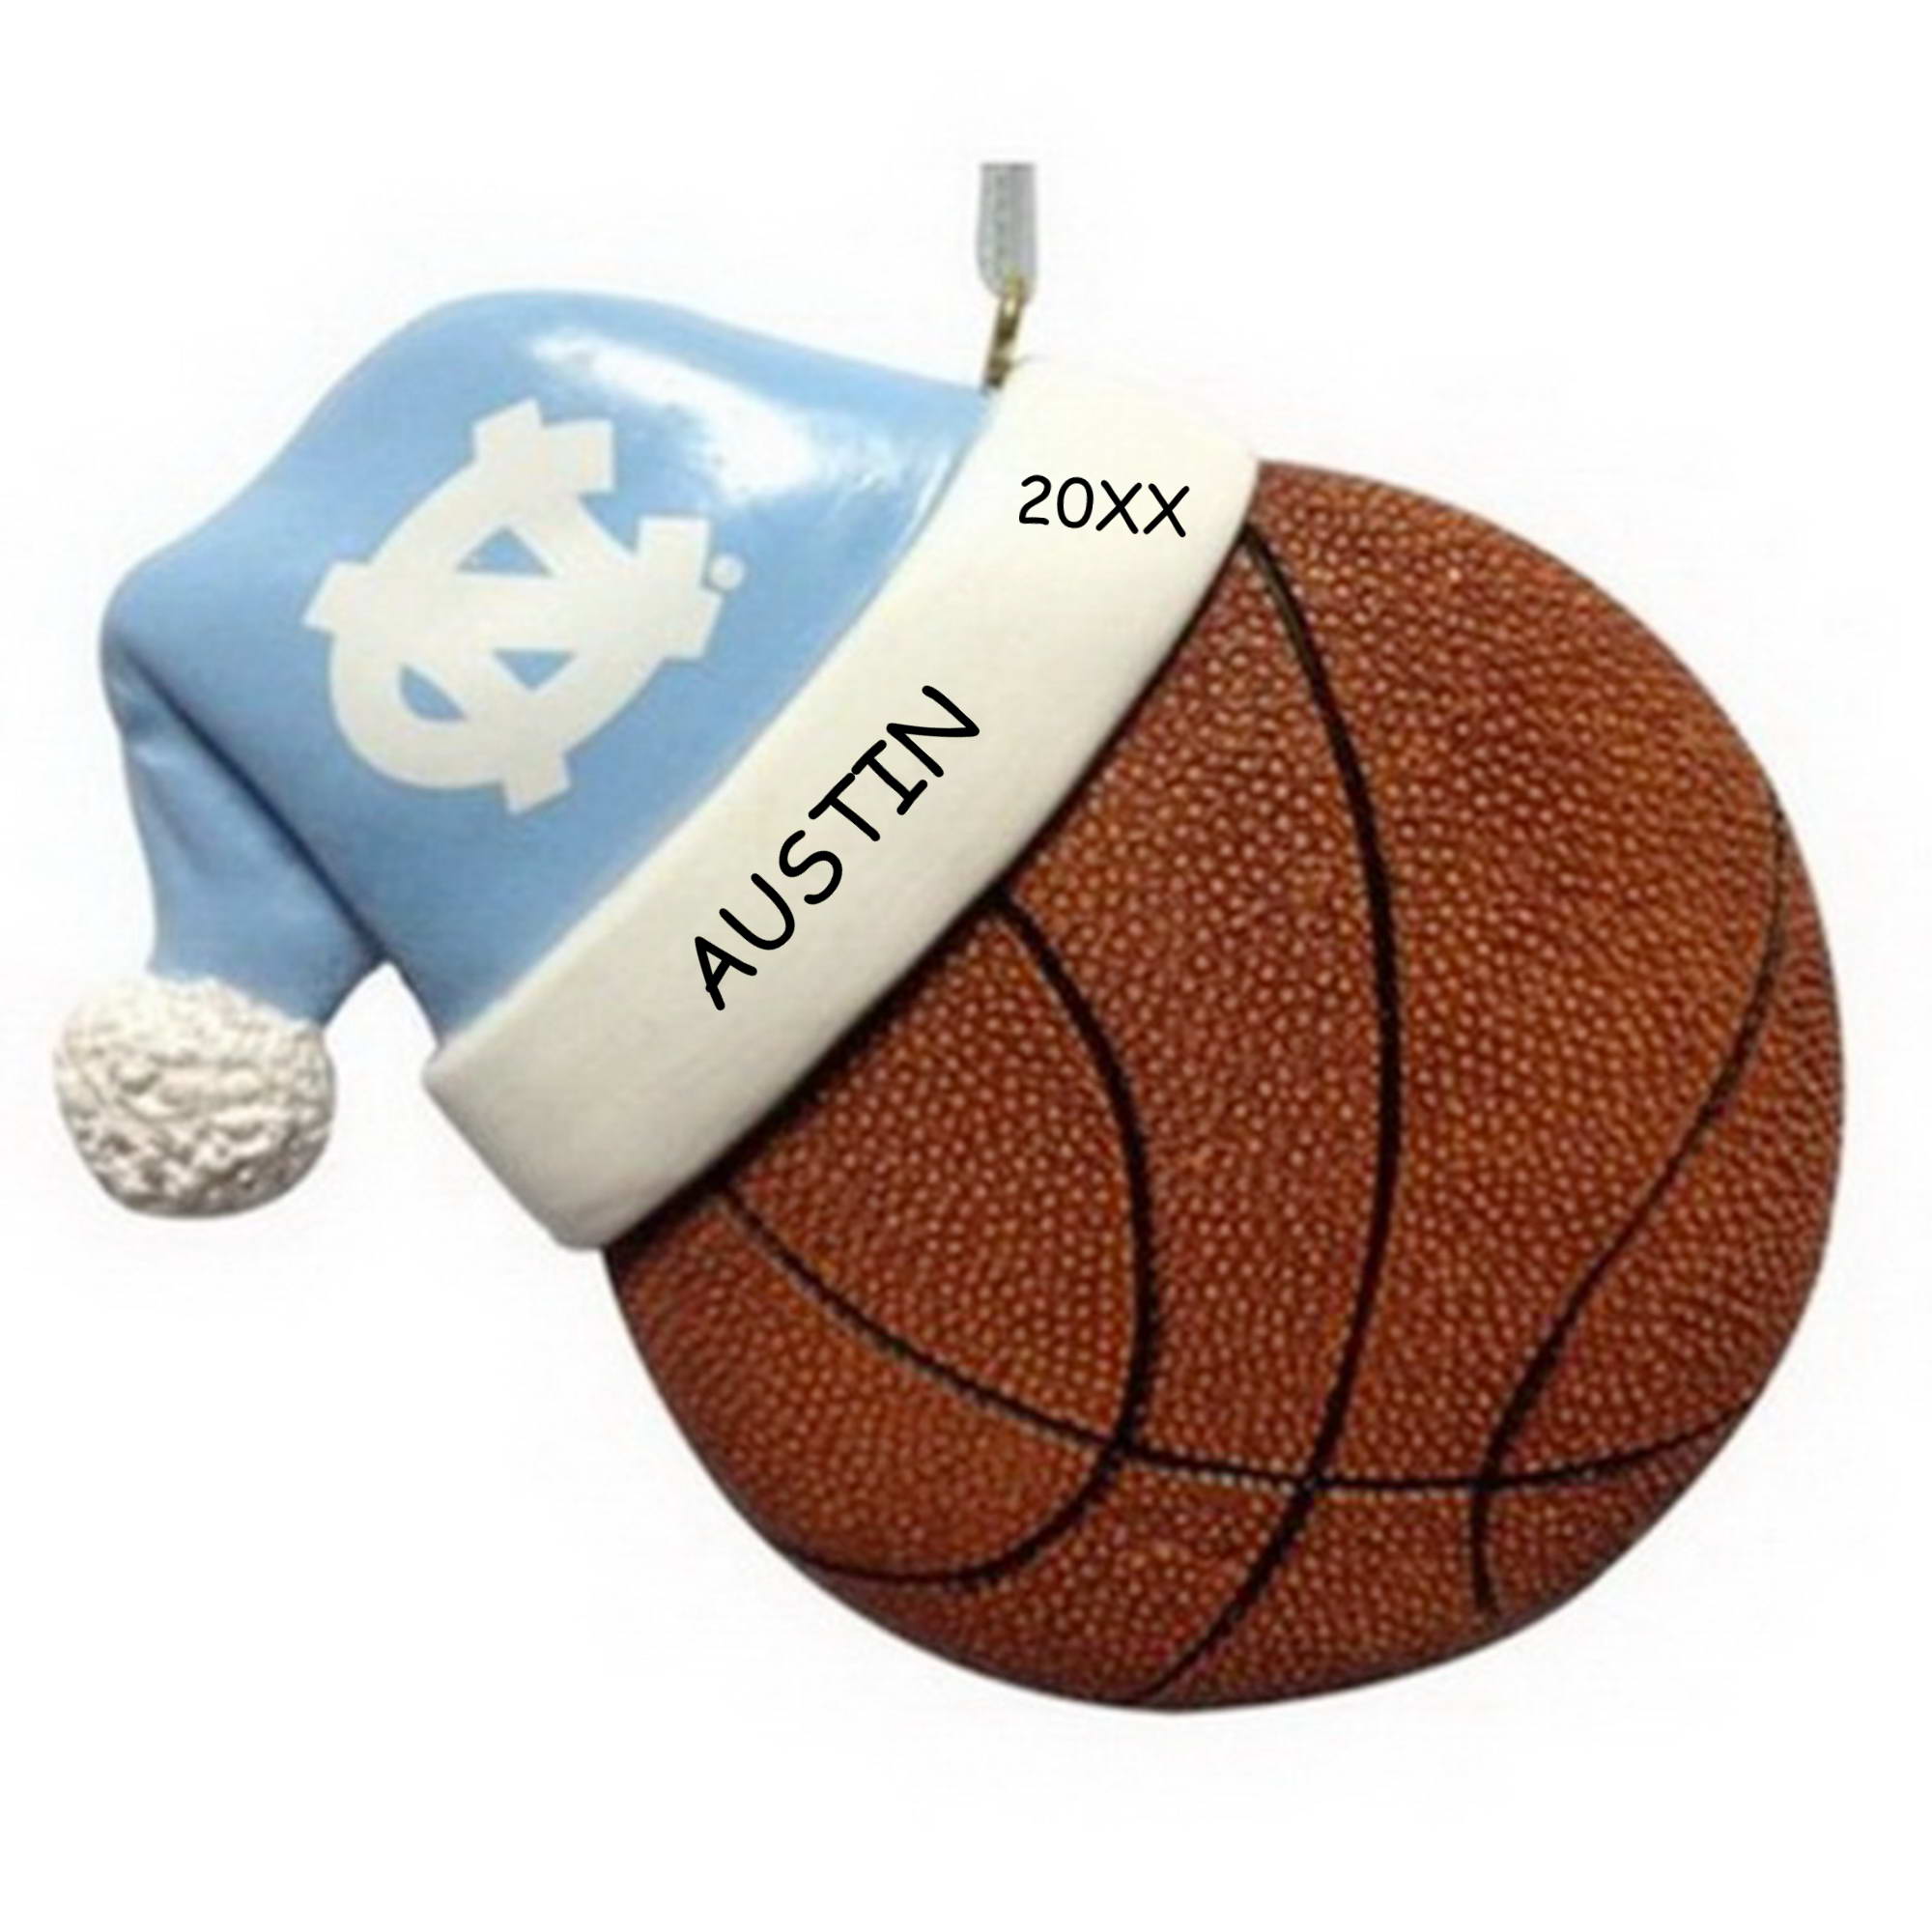 Personalized Licensed Collegiate Basketball Sports Christmas Ornament - University of North Carolina